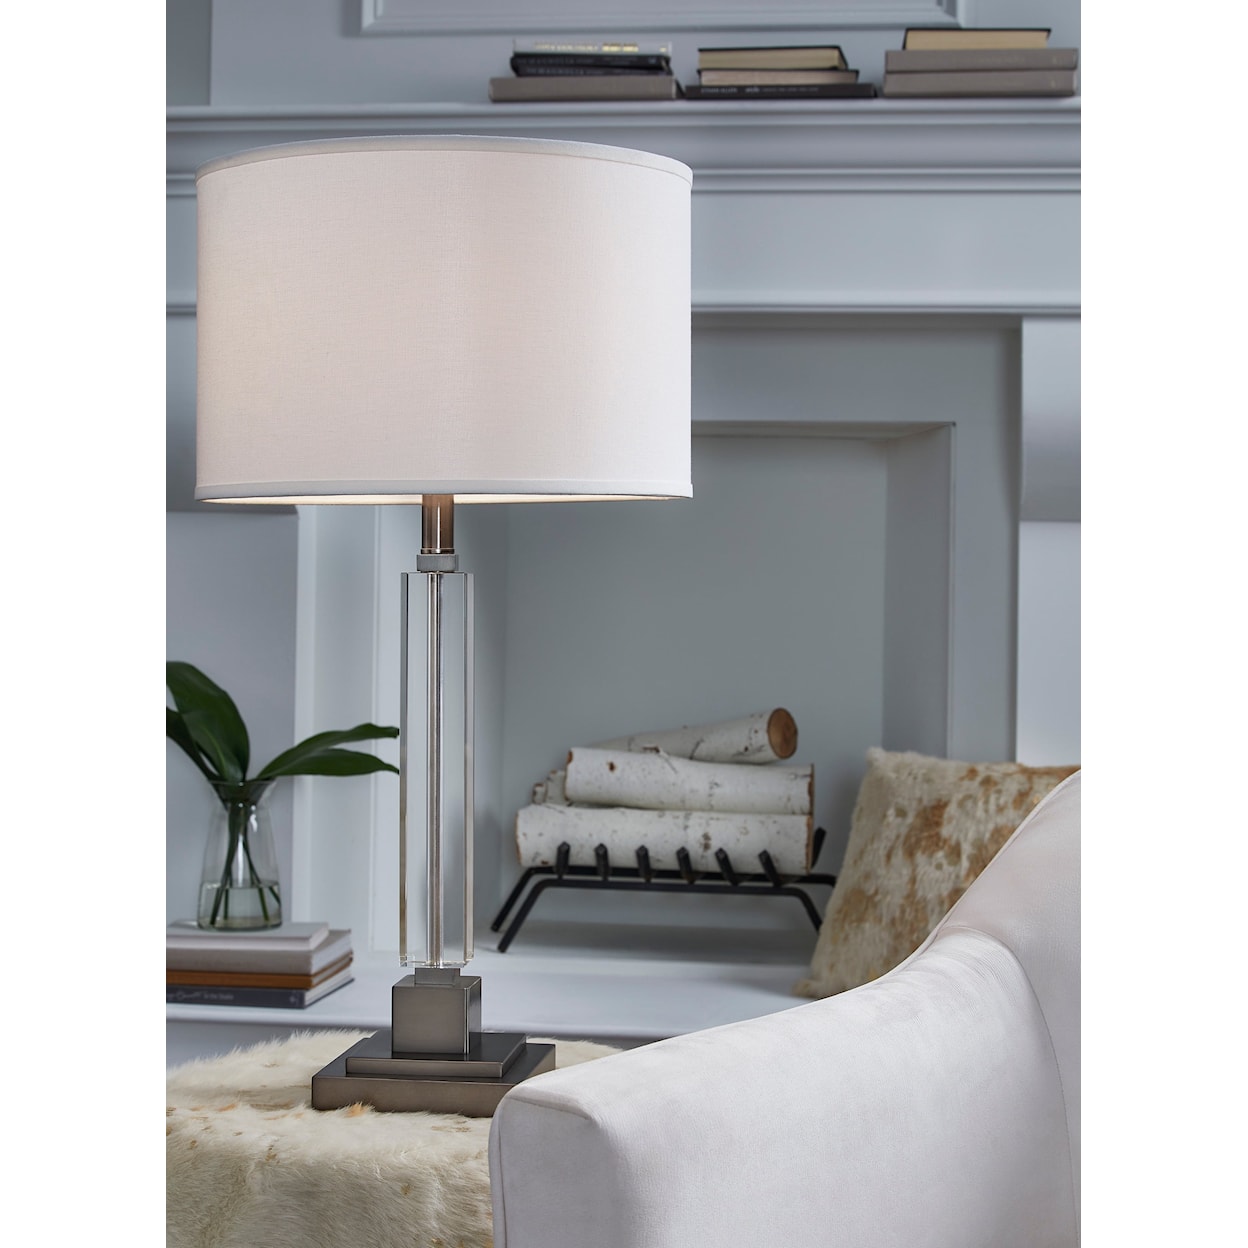 Michael Alan Select Lamps - Contemporary Deccalen Table Lamp